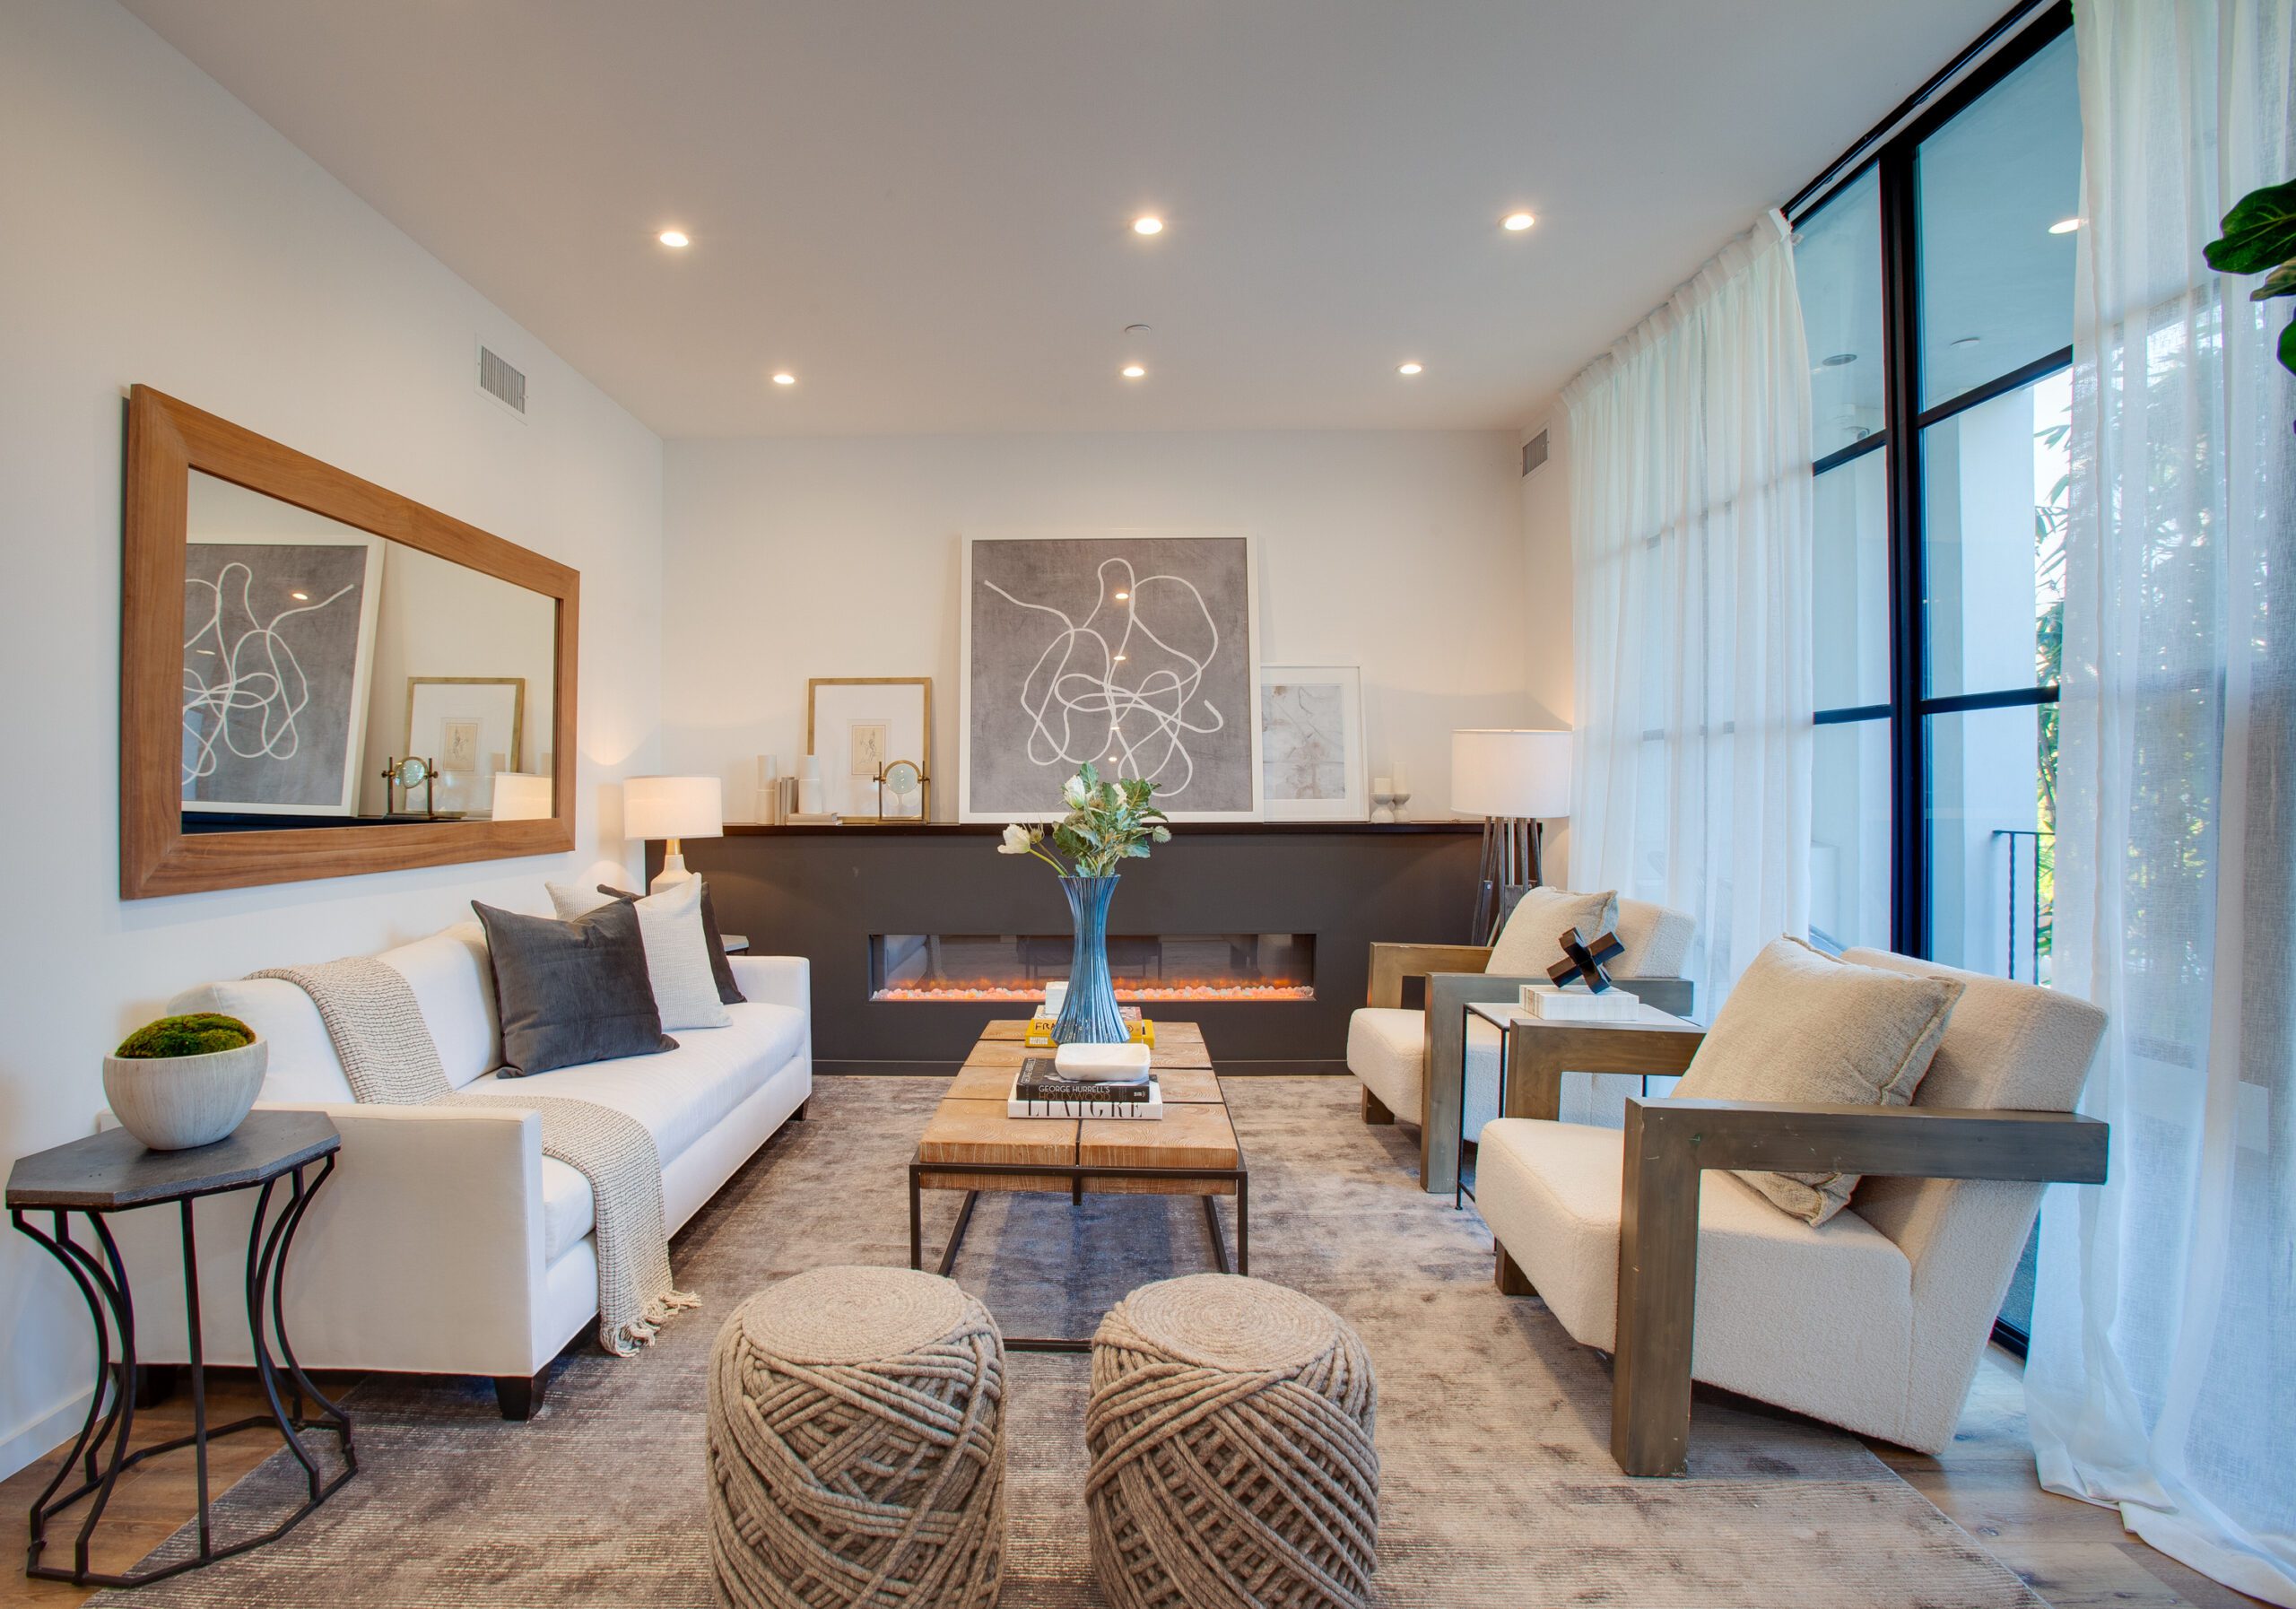 Modern living room with elegant furnishings